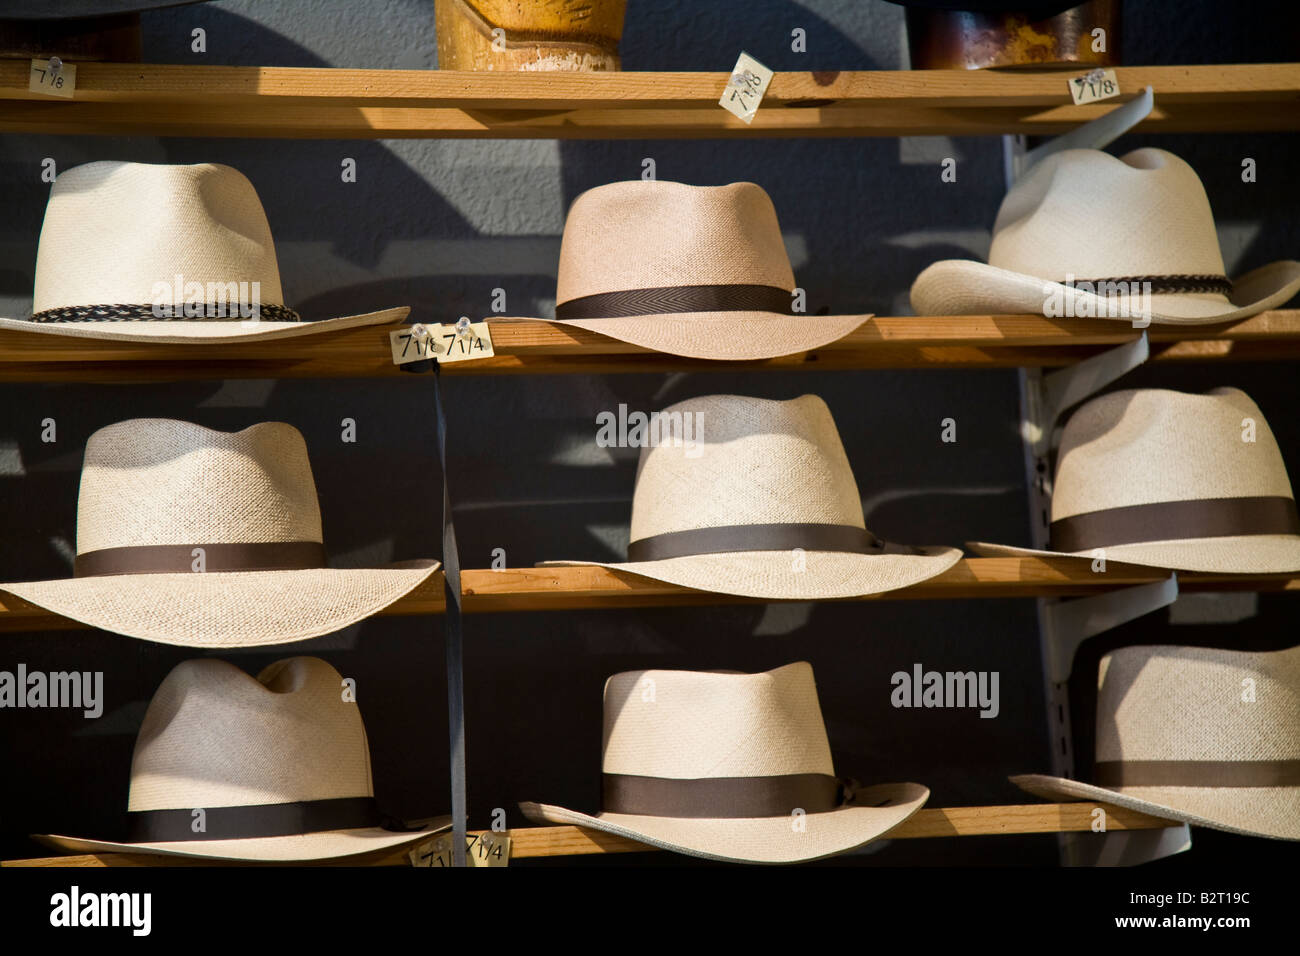 Handmade hats on display Stock Photo